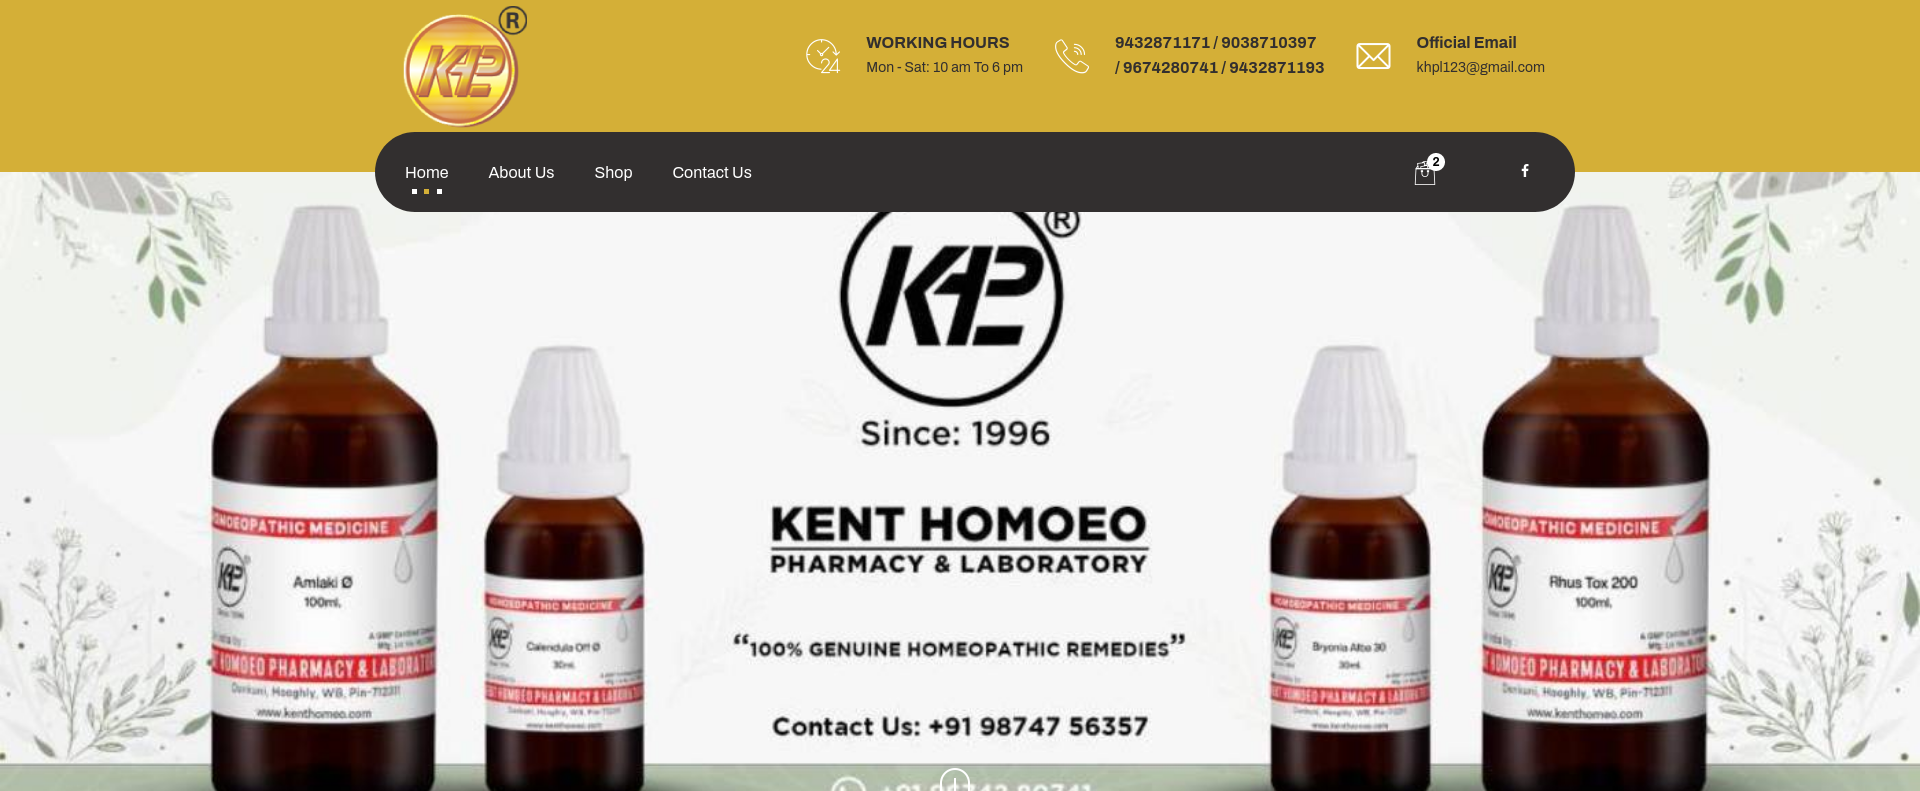 Kent Homoeo Pharmacy & Laboratory